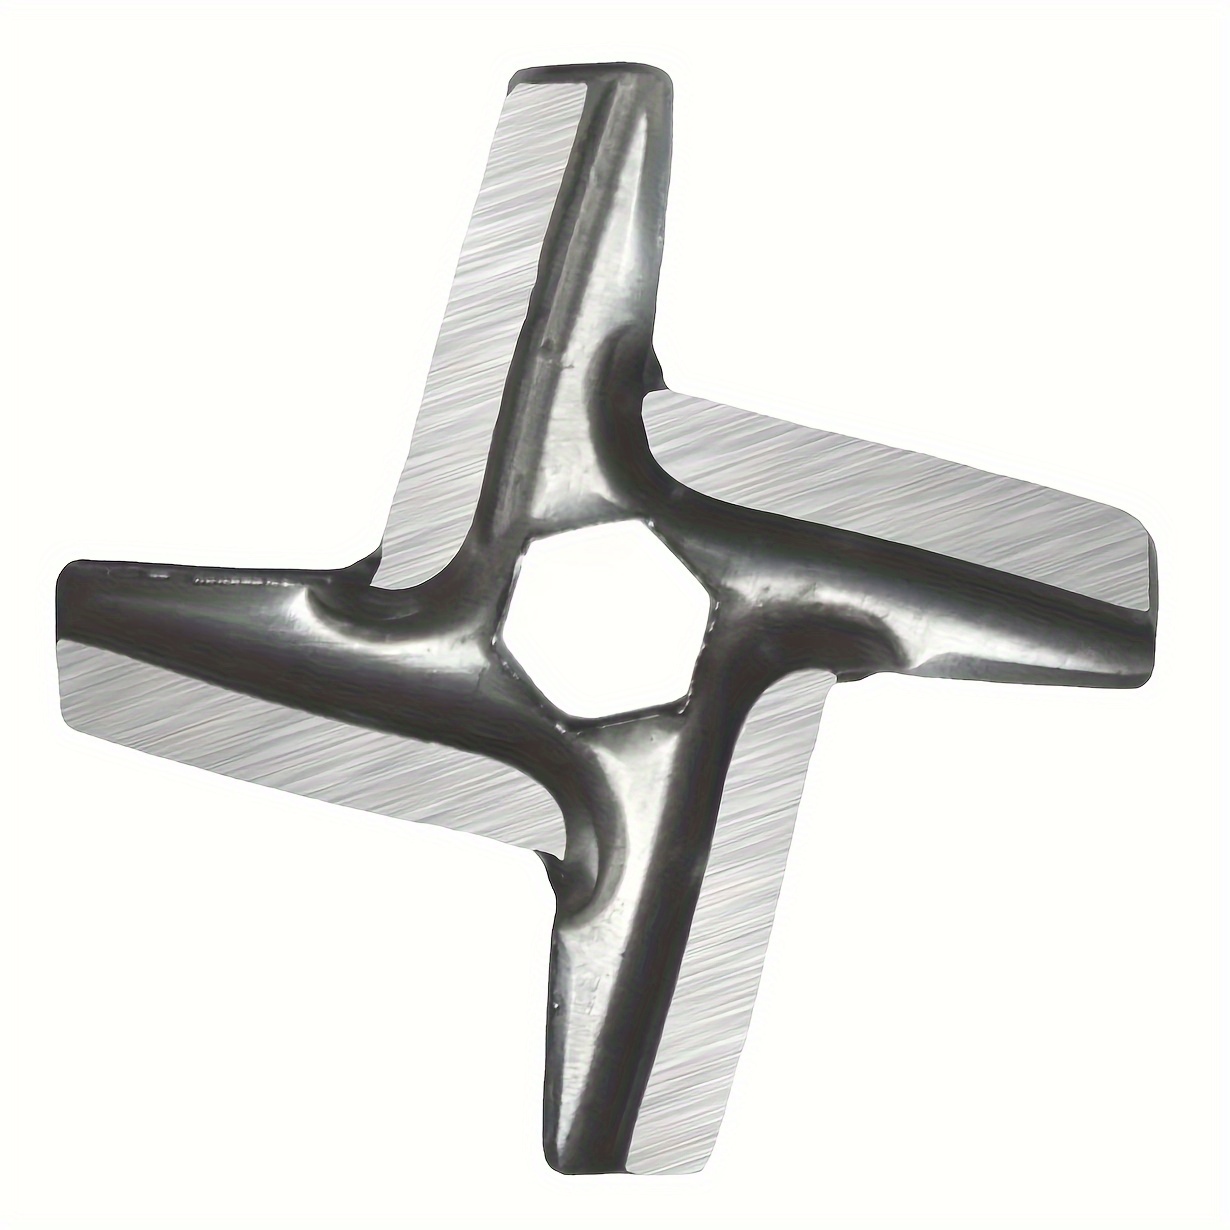 Hexagonal replacement blades